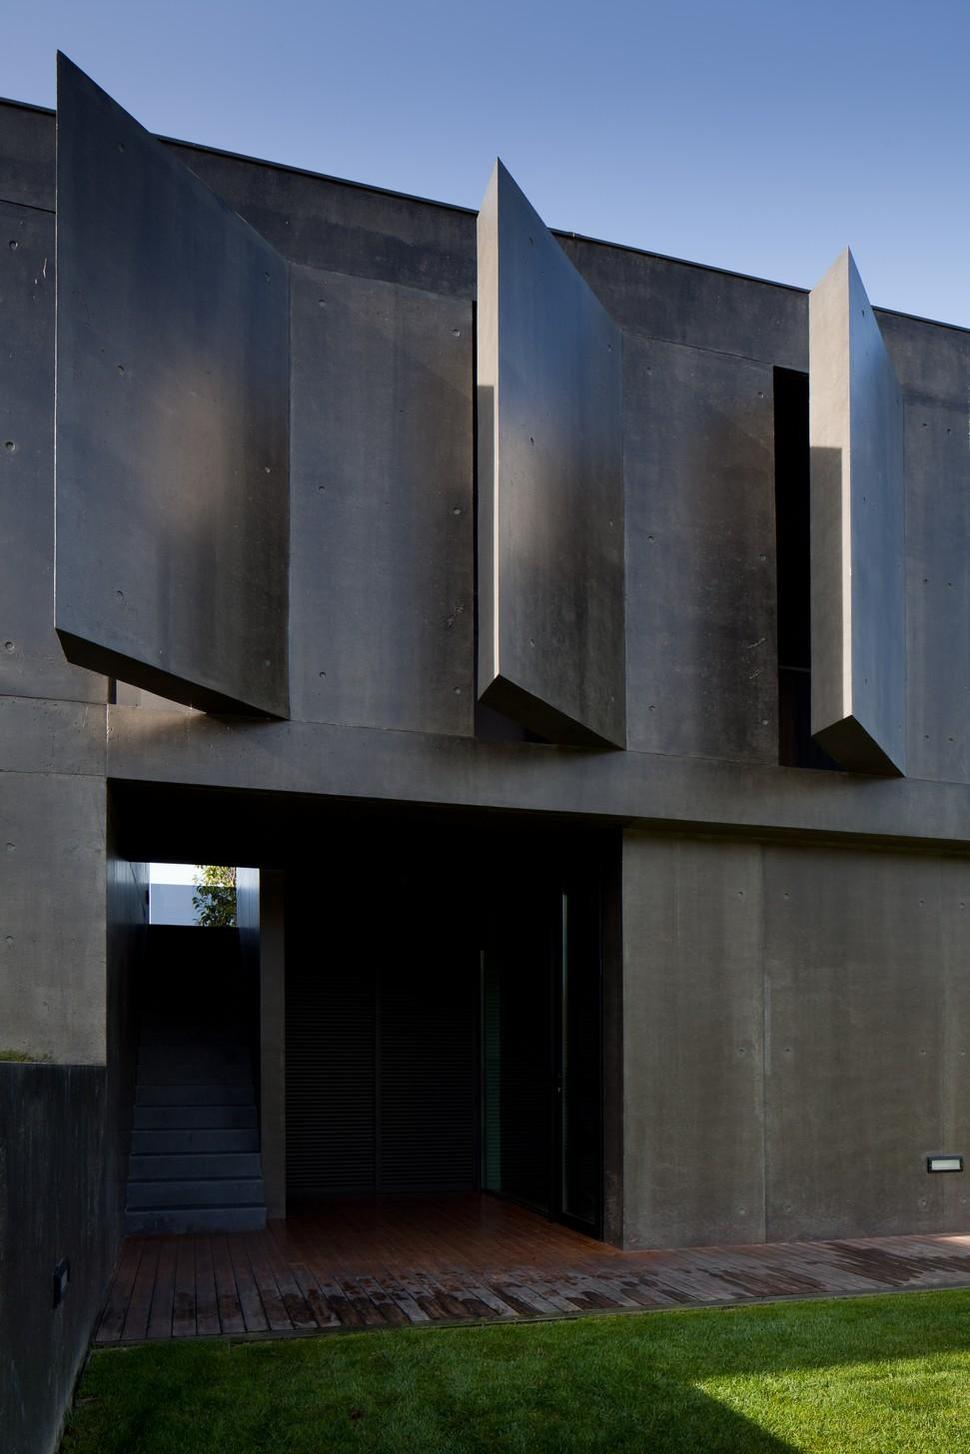 black-home-with-bright-interior-built-into-grassy-hillside-14-angled-concrete.jpg